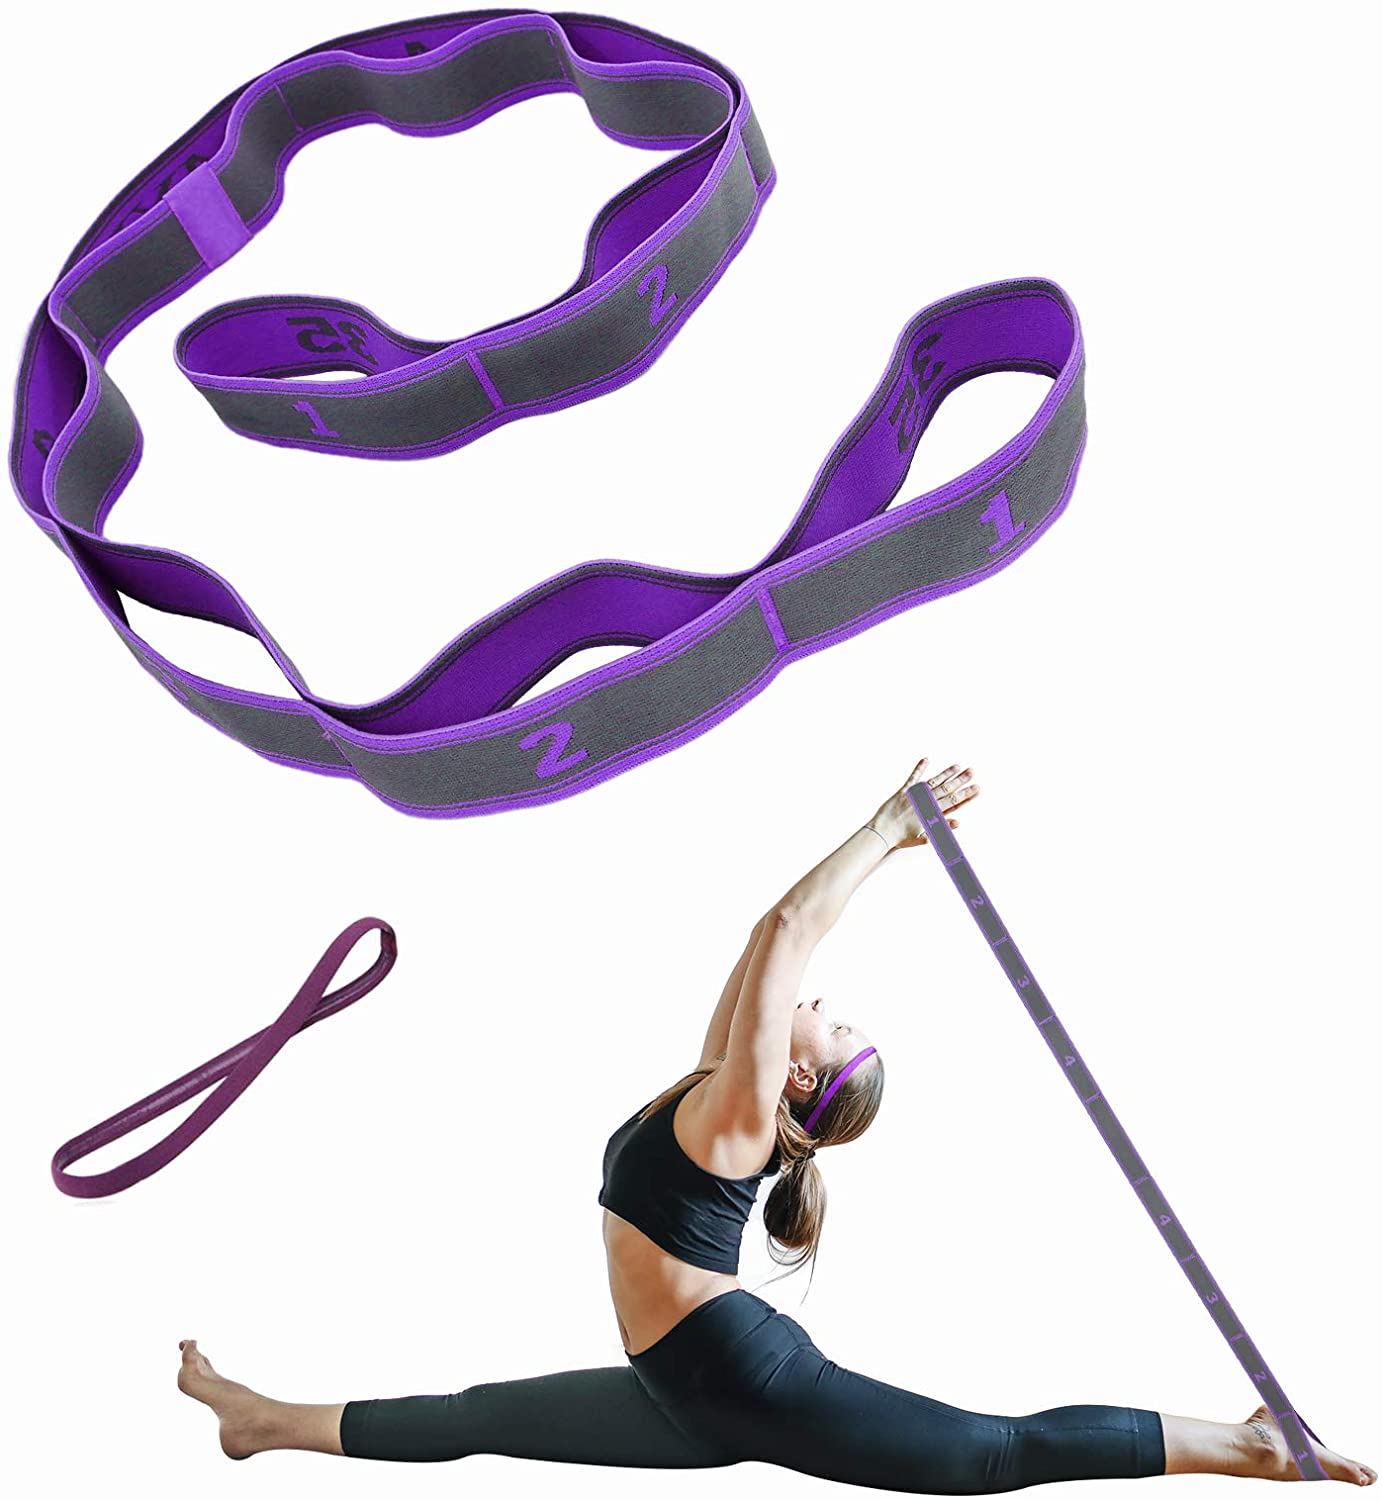  Correa elástica de yoga para terapia física, correas de yoga  con múltiples bucles para estirar, cinturón de estiramiento de pies, equipo  de terapia física, banda elástica para pilates, ejercicio, baile, azul 